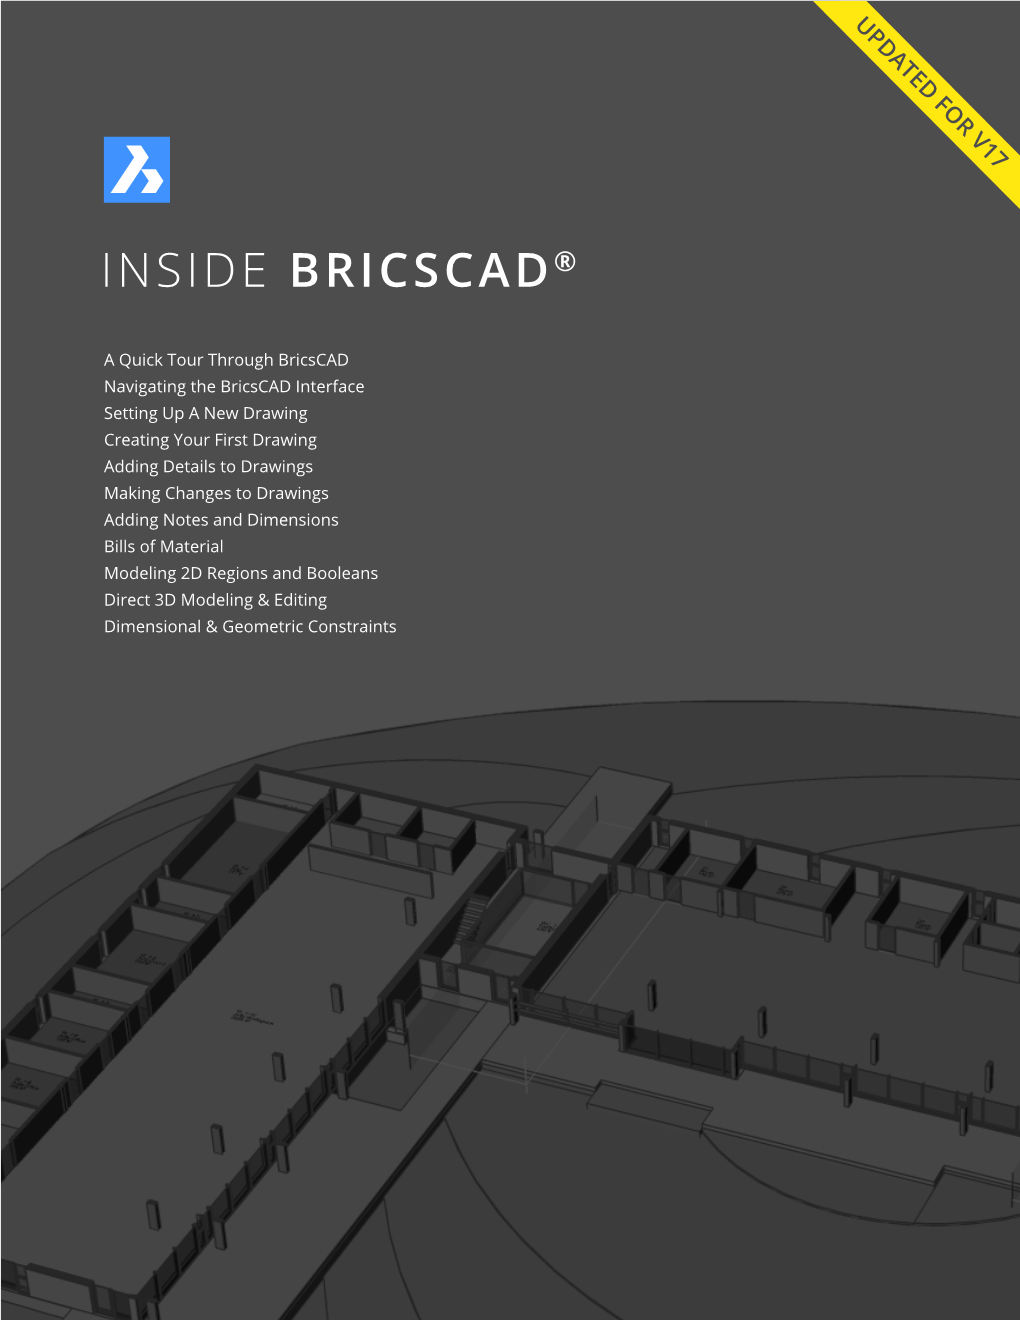 Inside Bricscad®